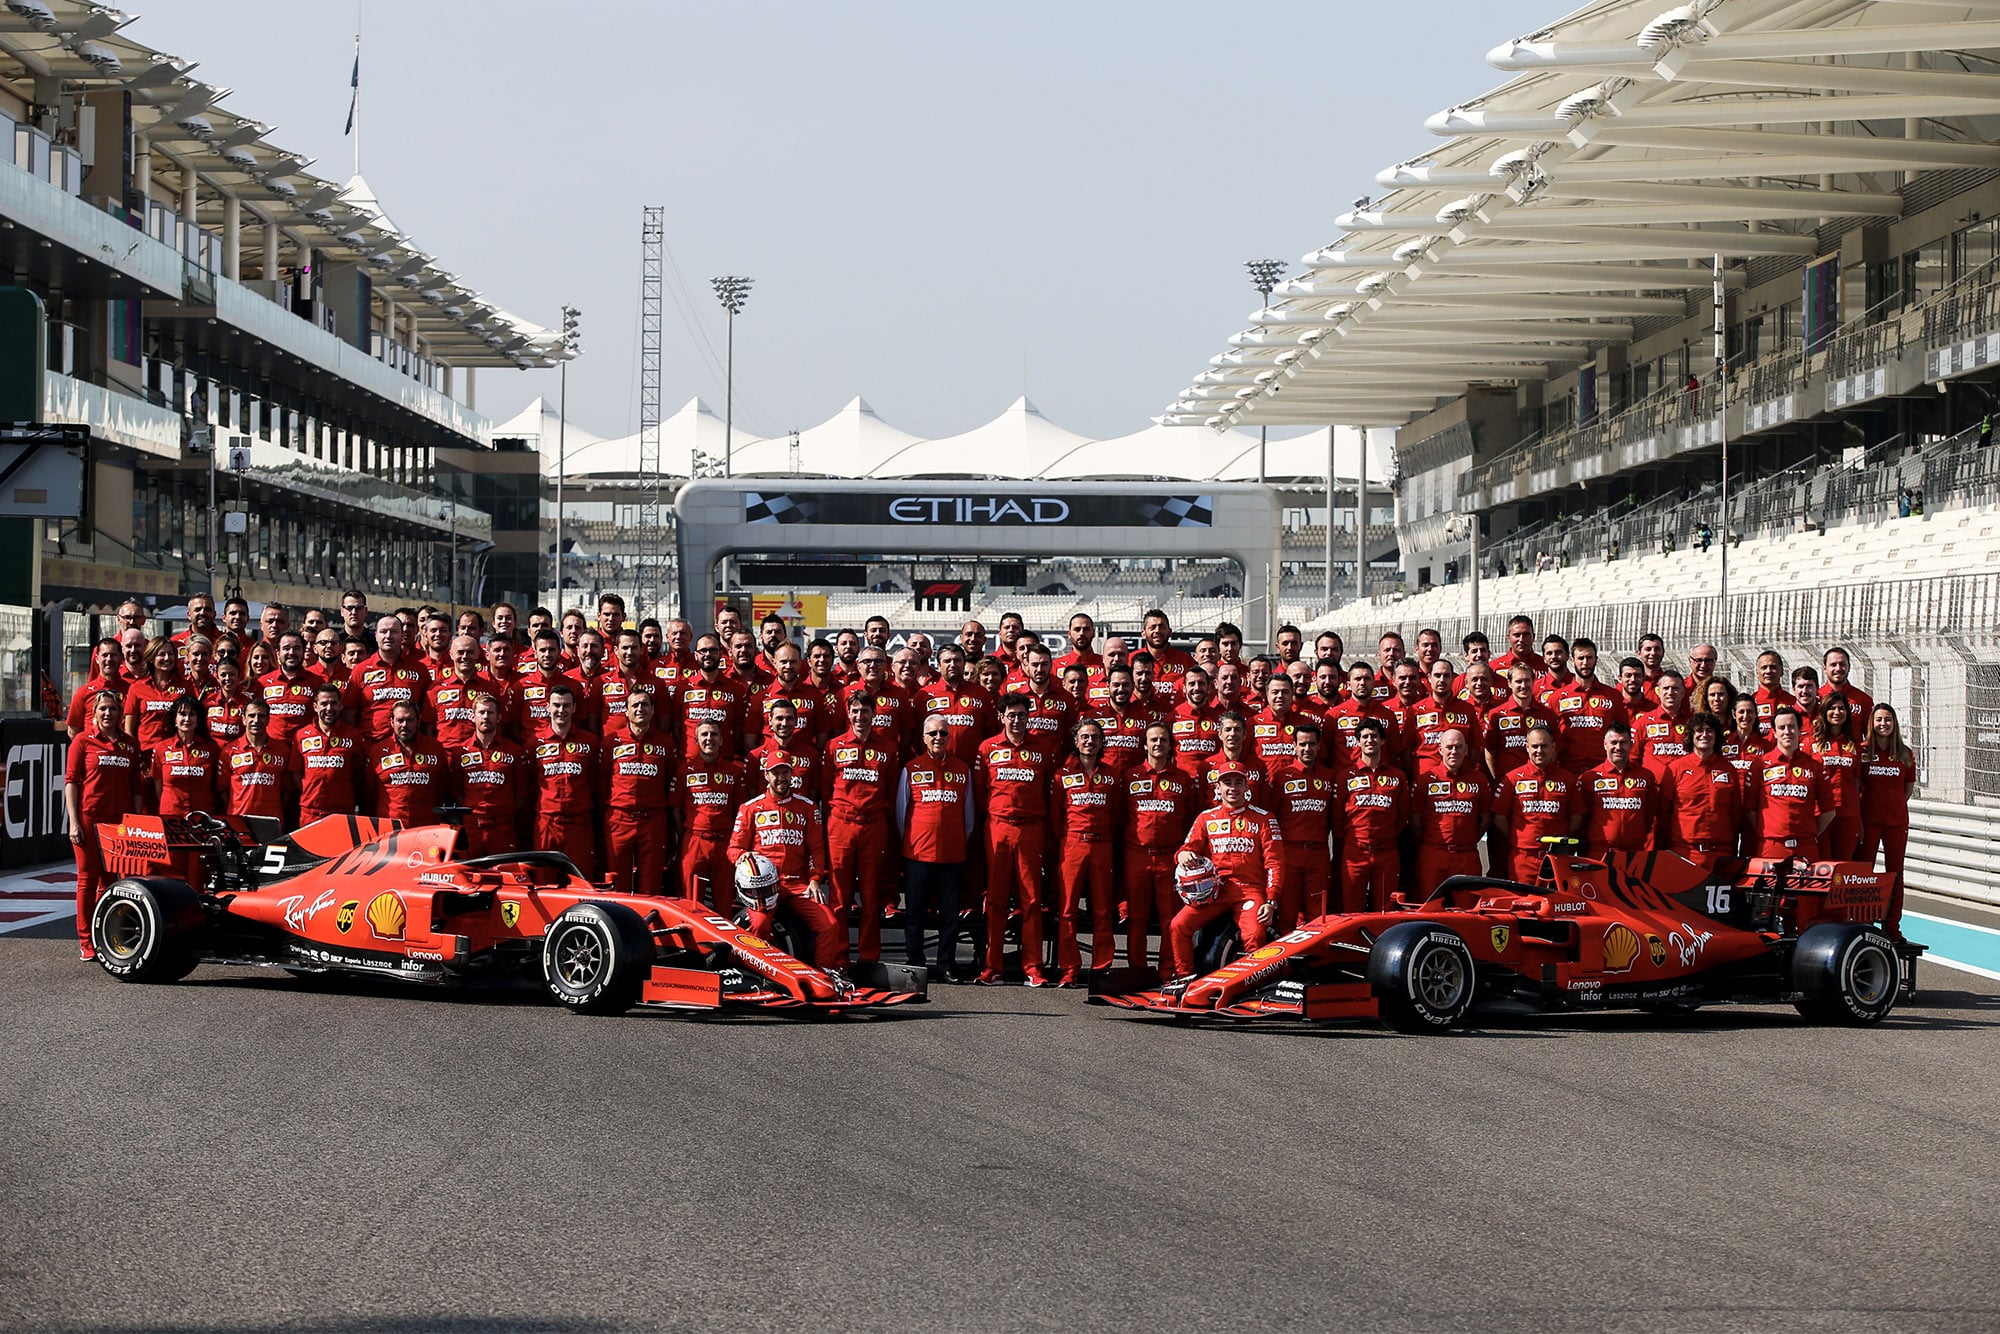 Ferrari's end of season photo from the 2019 Formula 1 season